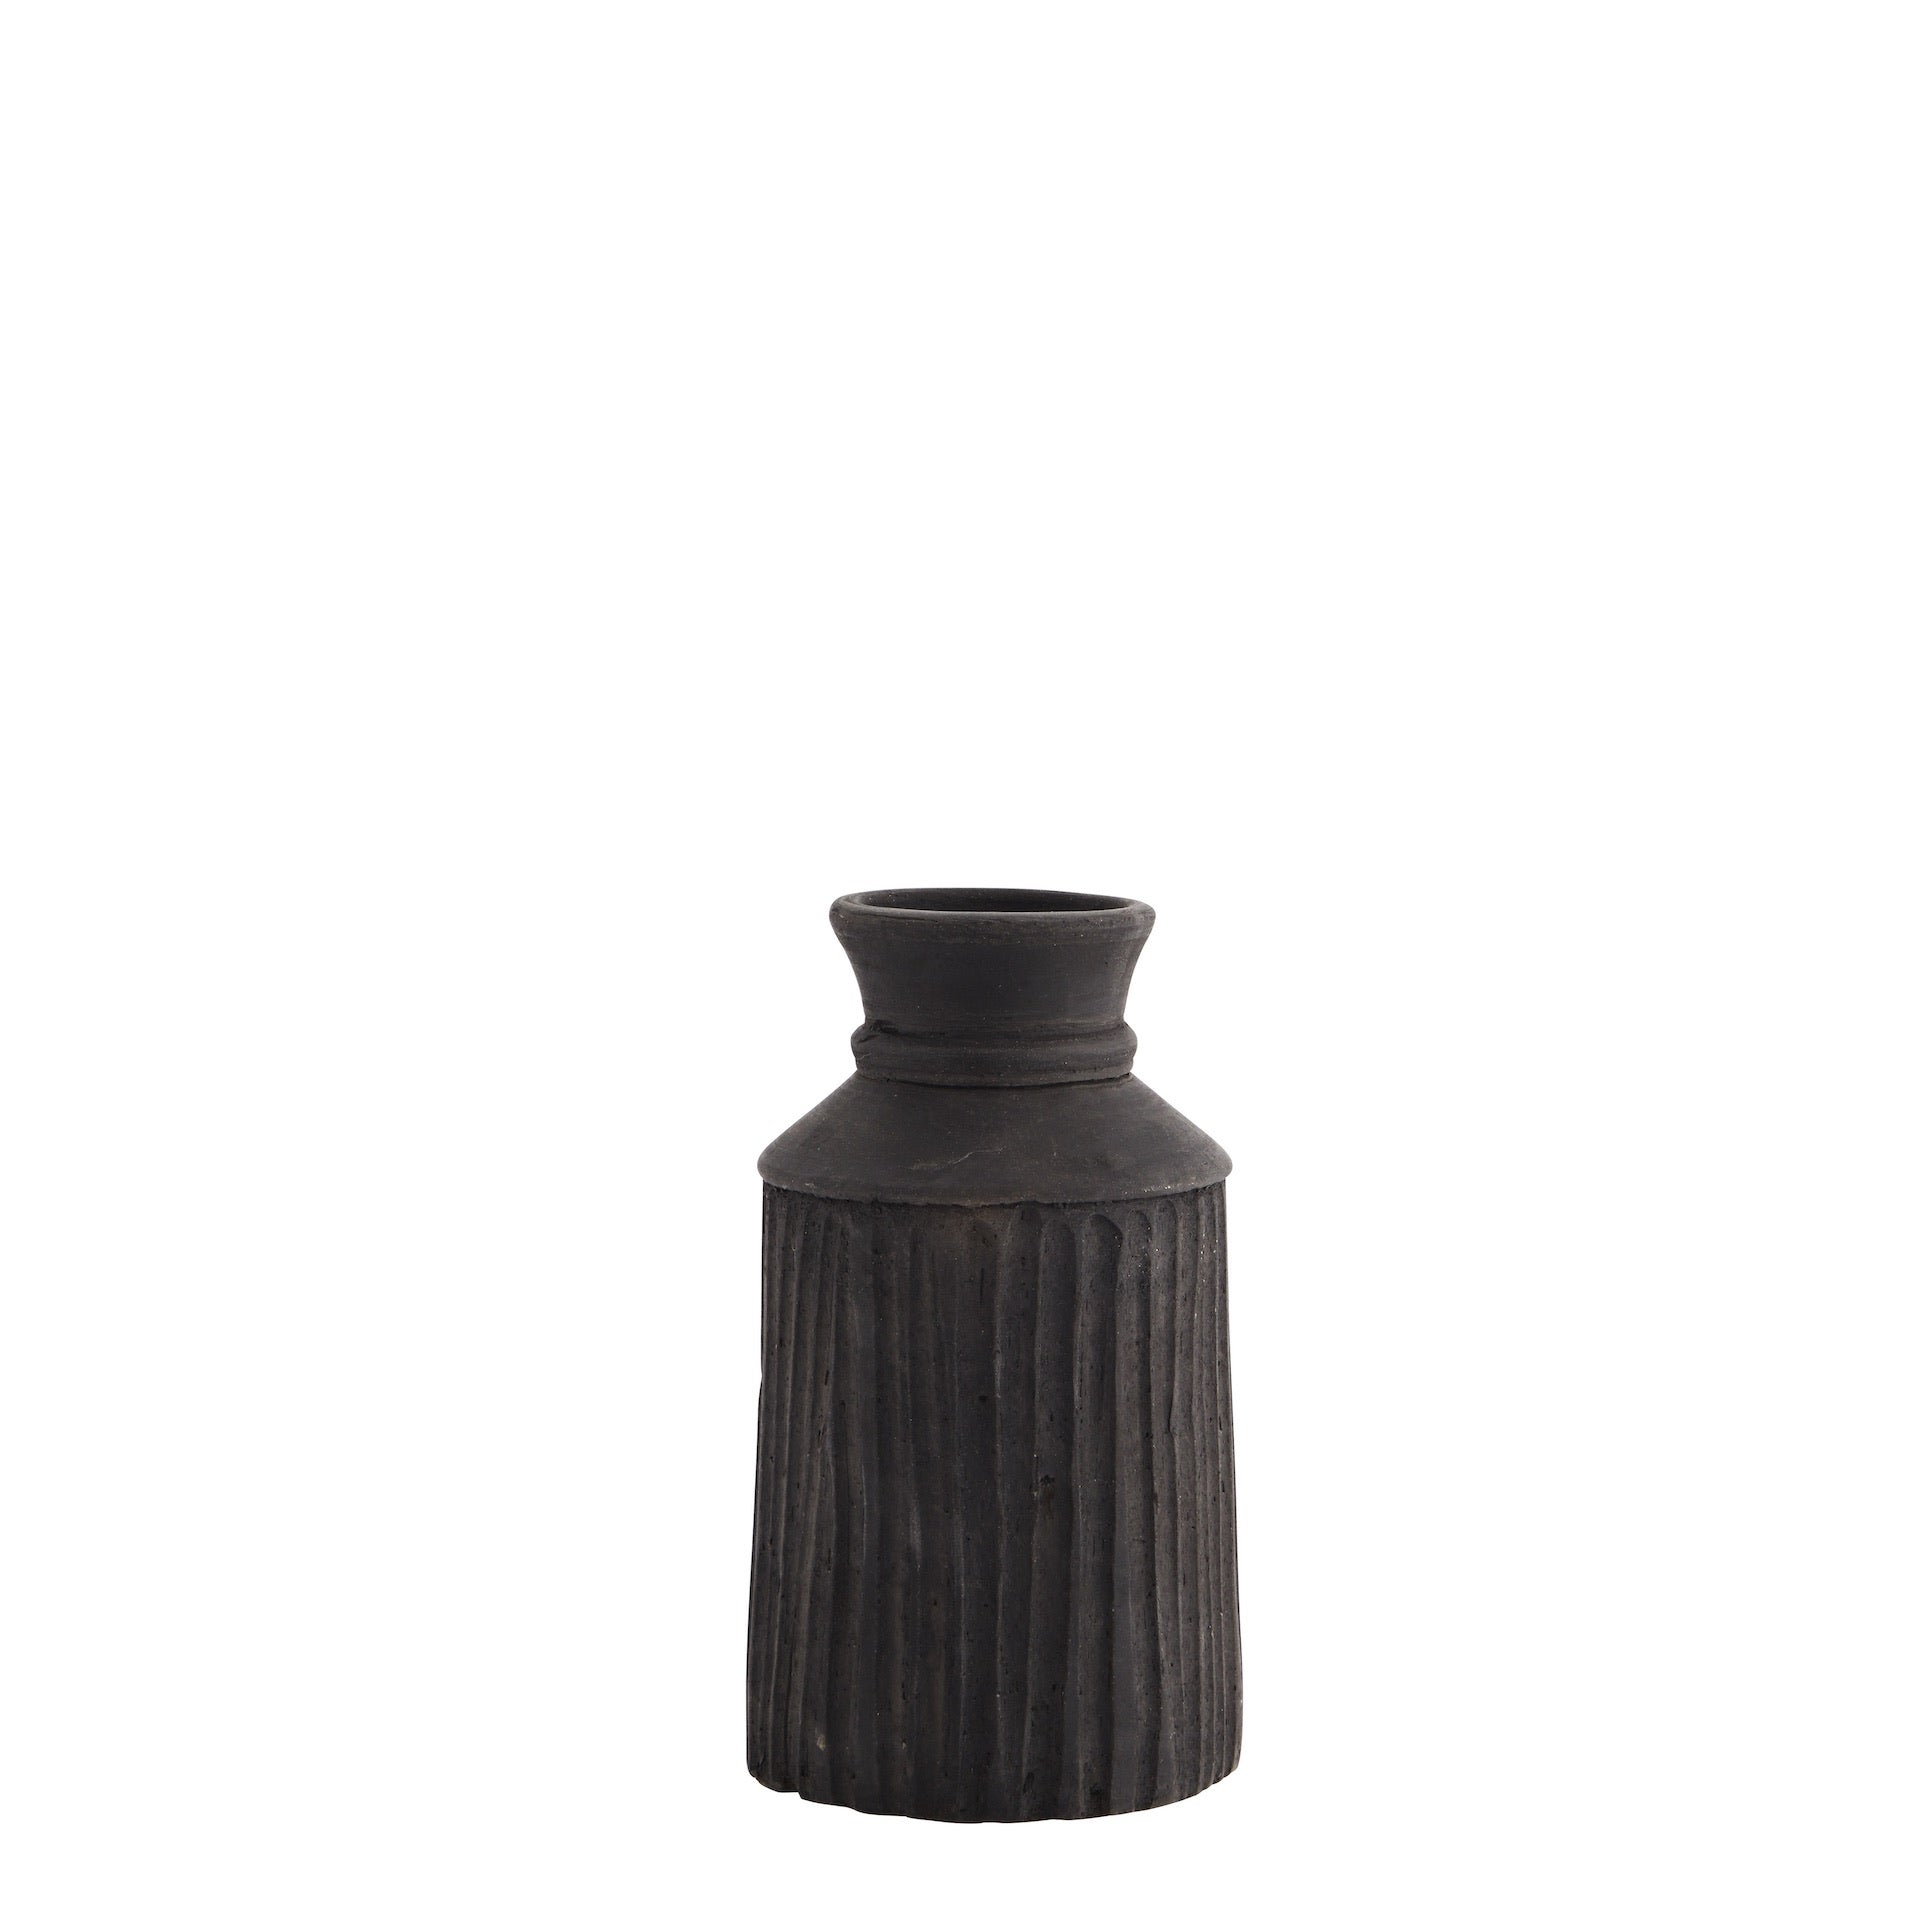 Black Rustic Terracotta Vase for Dried Flowers - Ivy Nook